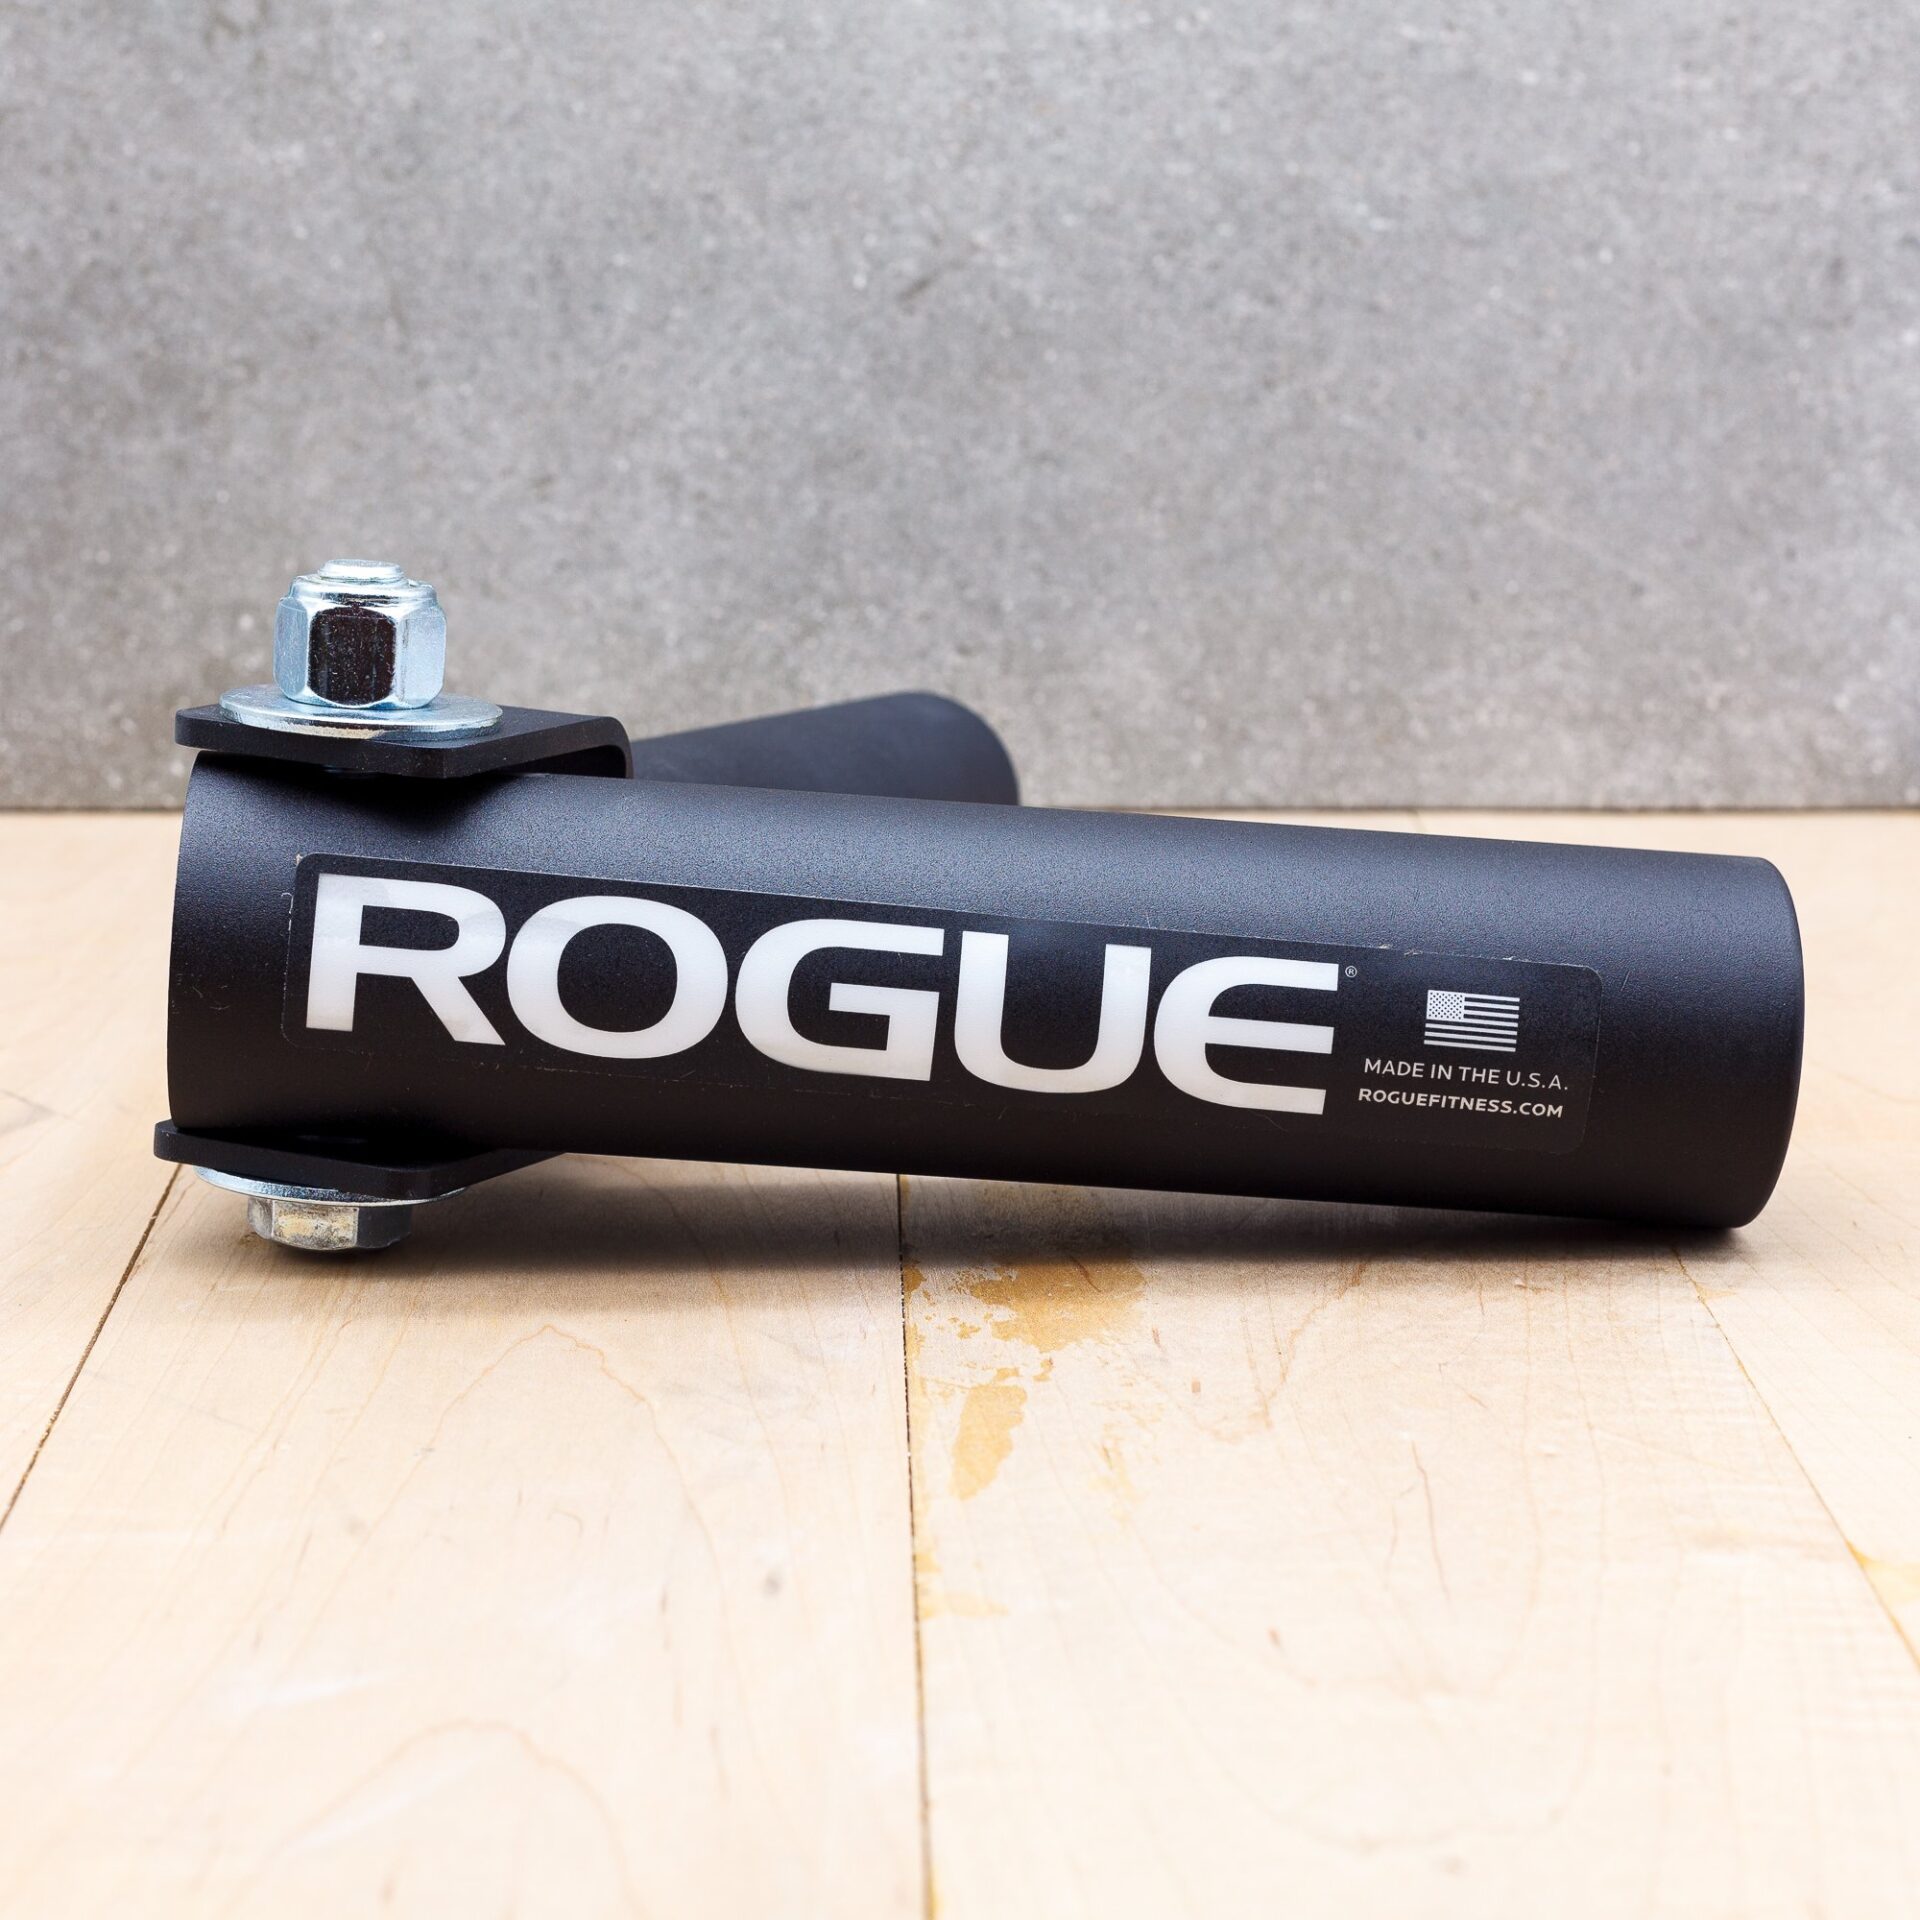 rogue-post-landmine-01-2000px.jpg